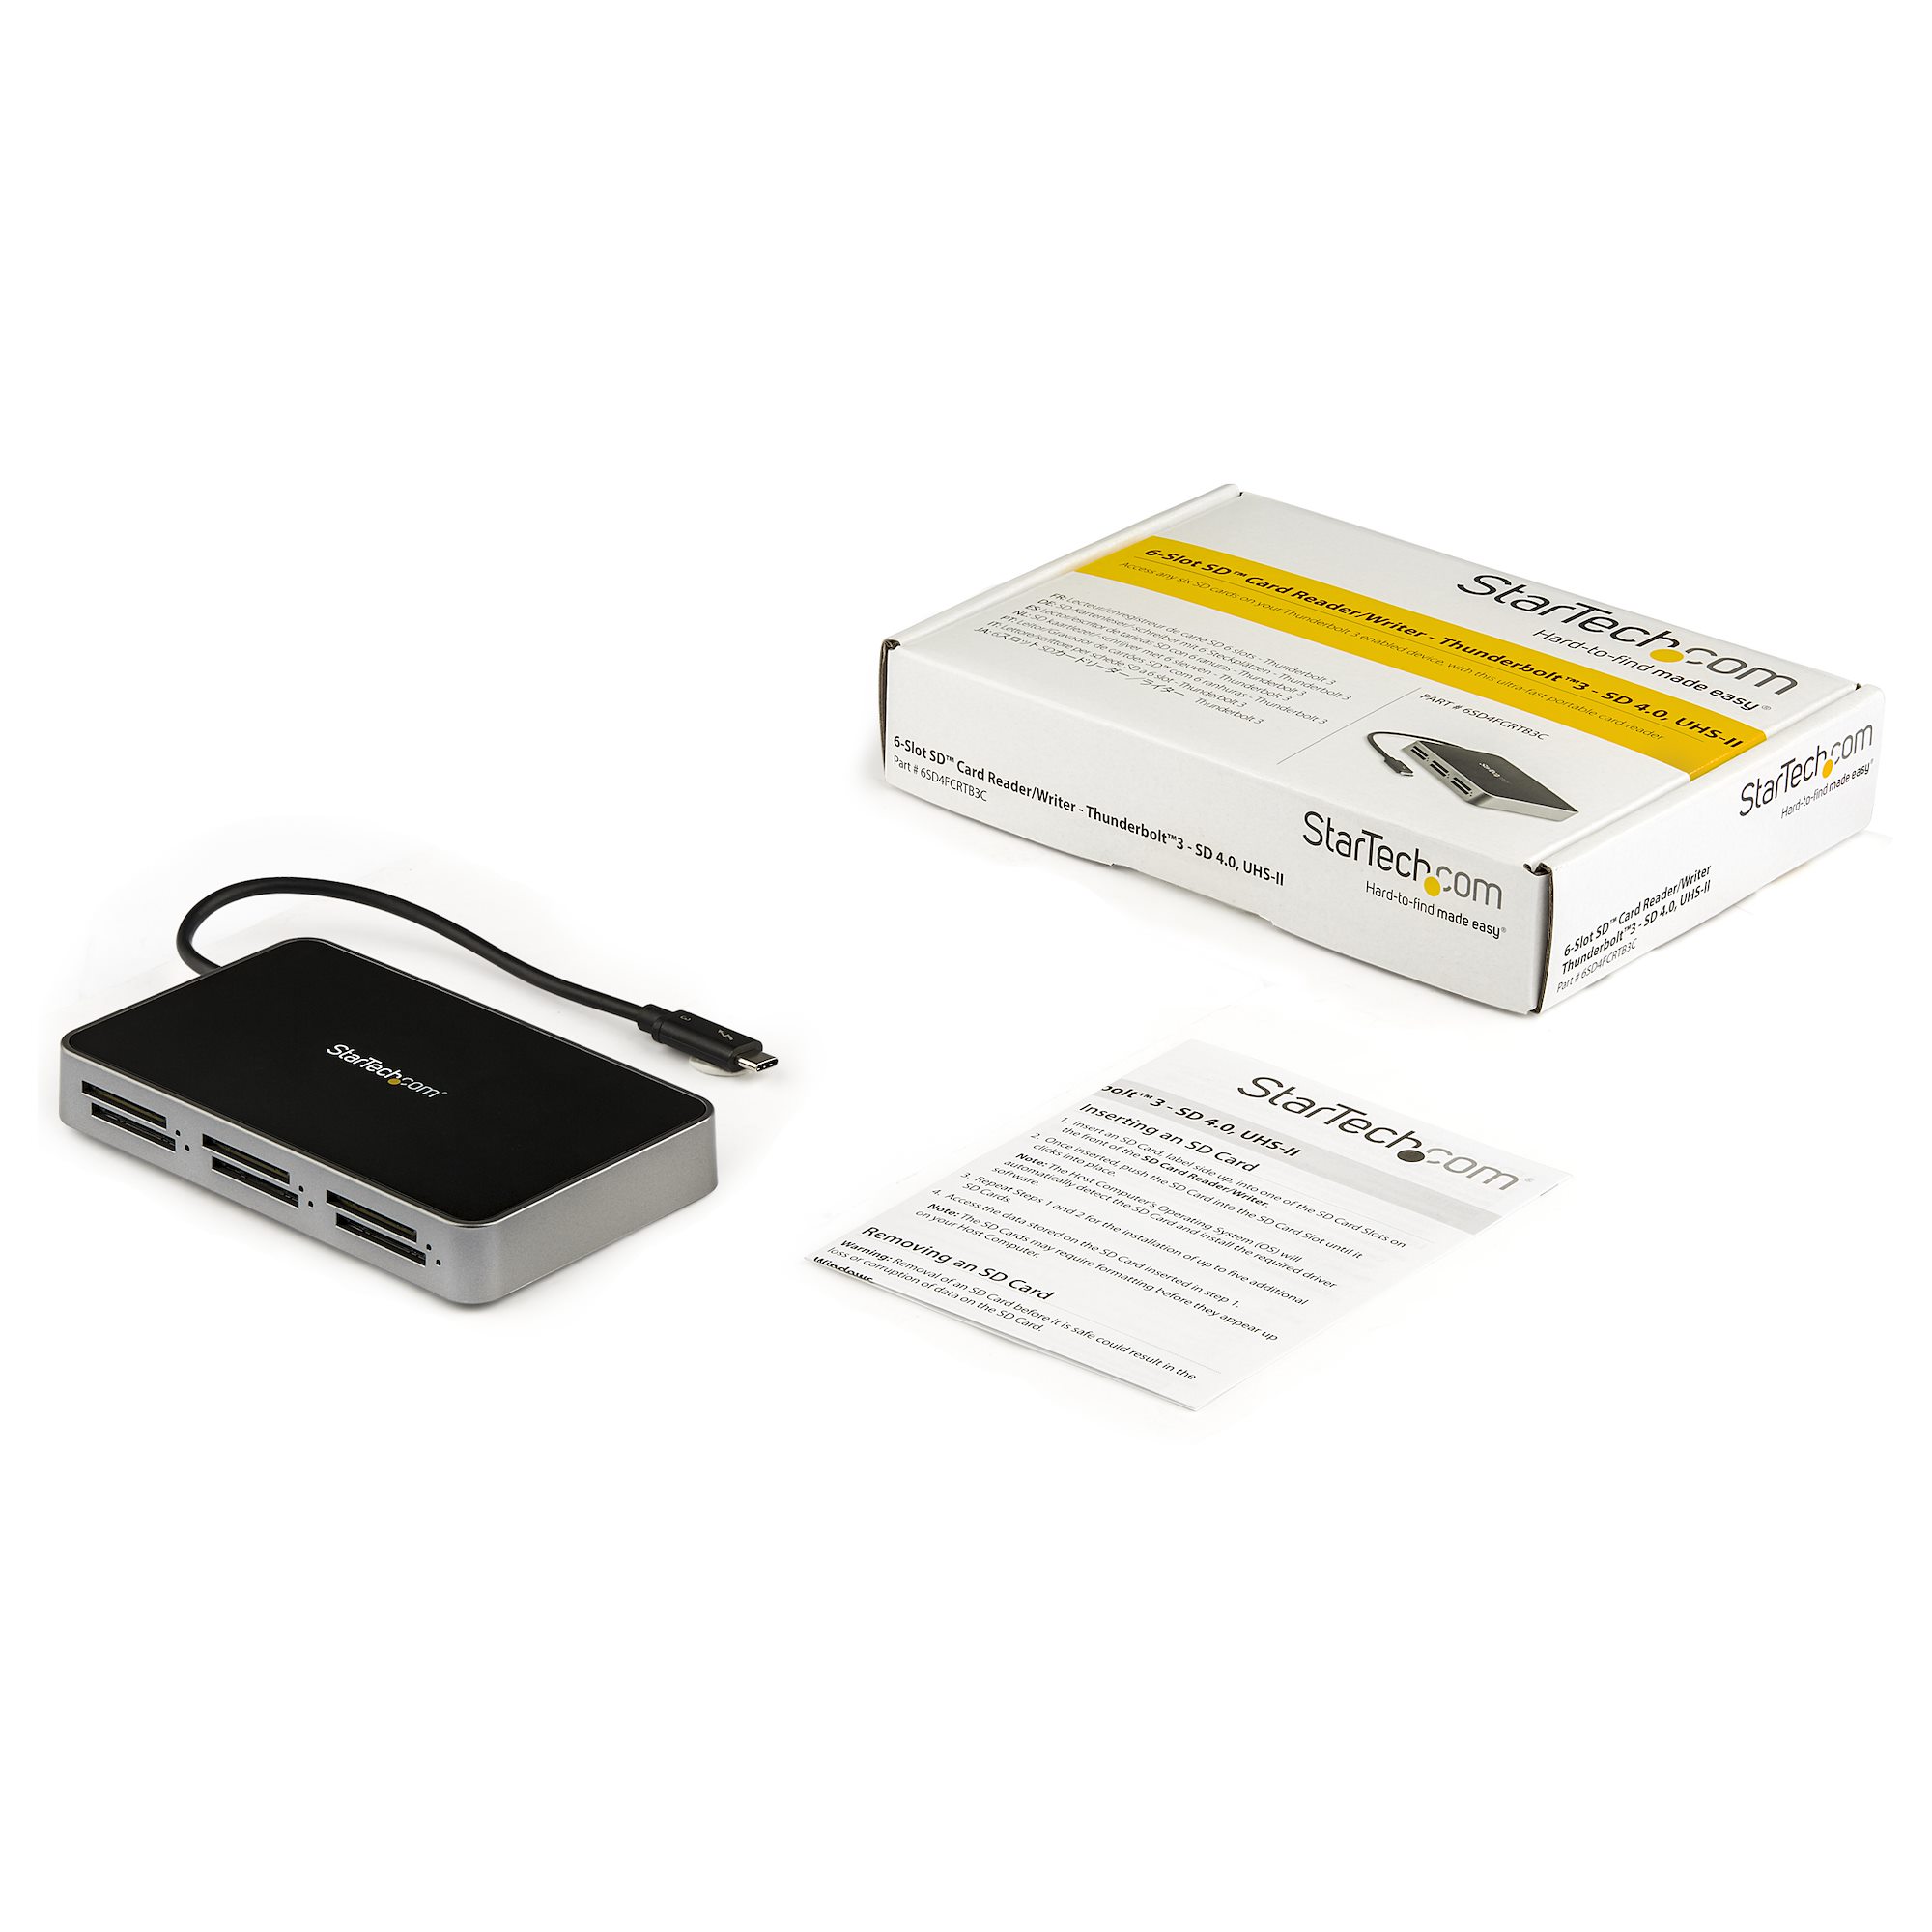 6-Slot Thunderbolt 3 SD Card Reader - Portable